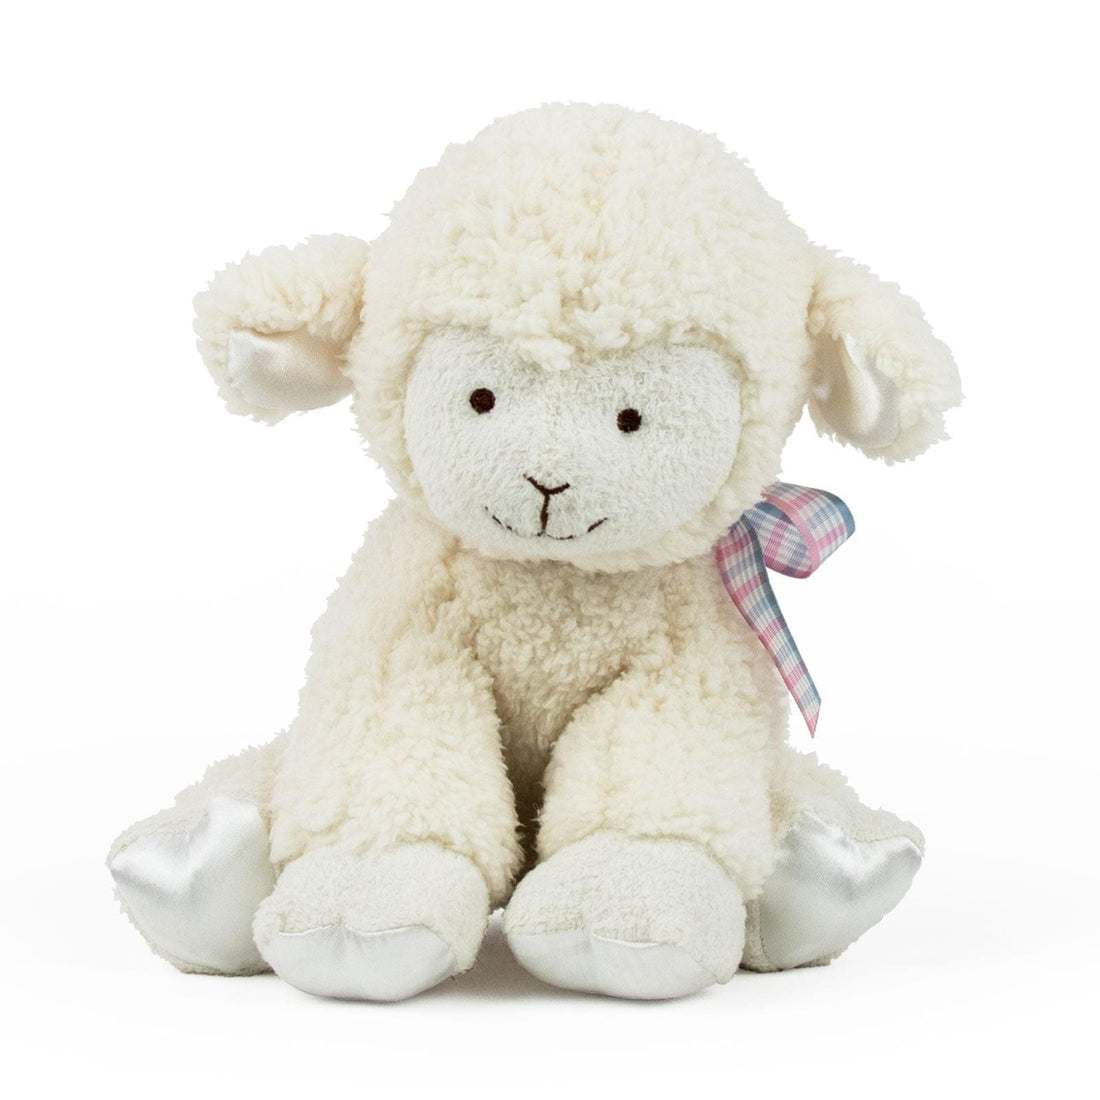 Soft and cuddly white lamb stuffed toy